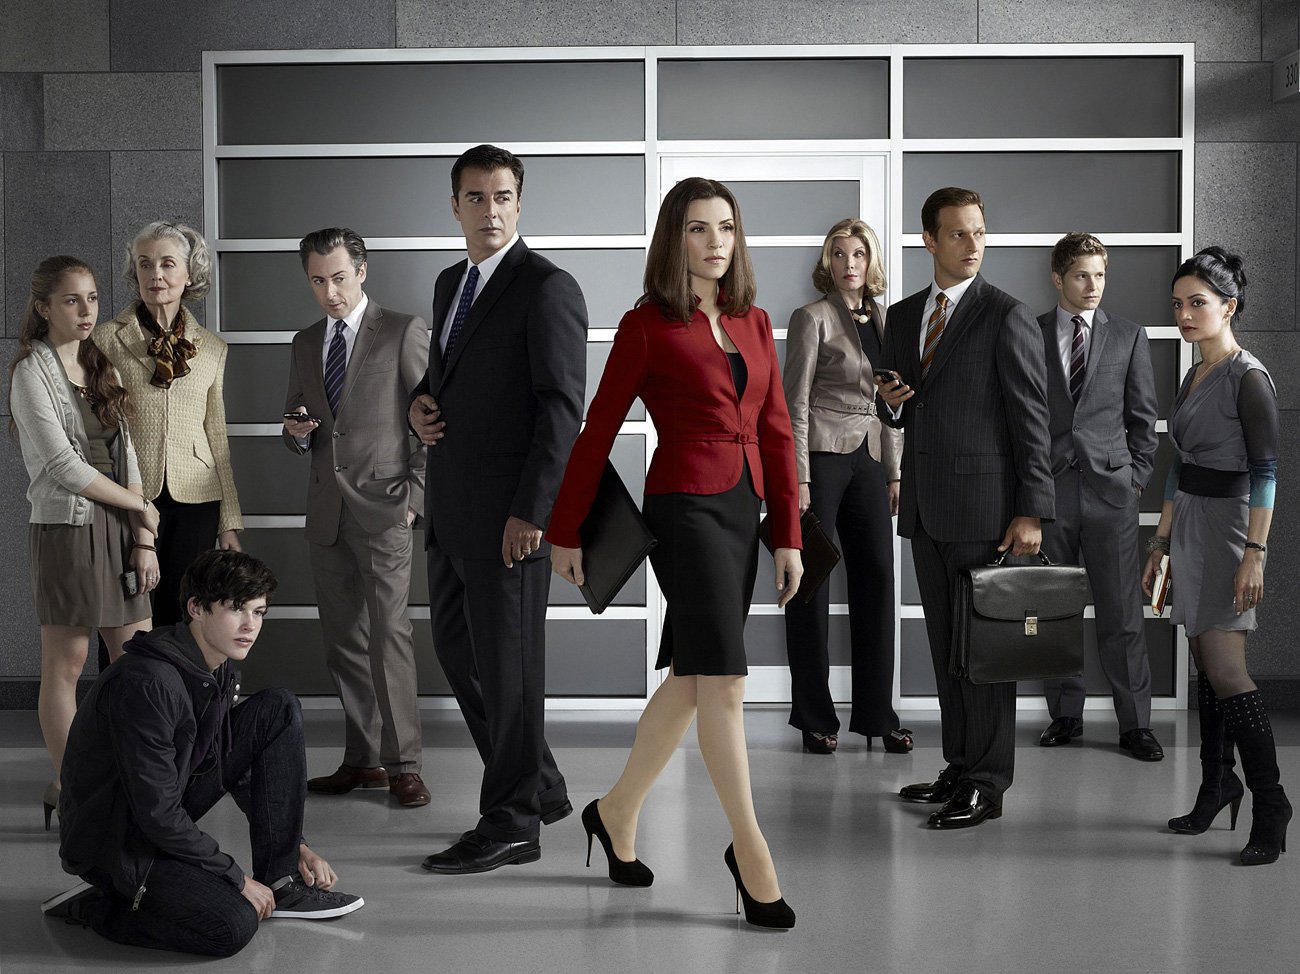 Imagen de estudio de The good wife, serie con 7 temporadas de abogados, política y amor